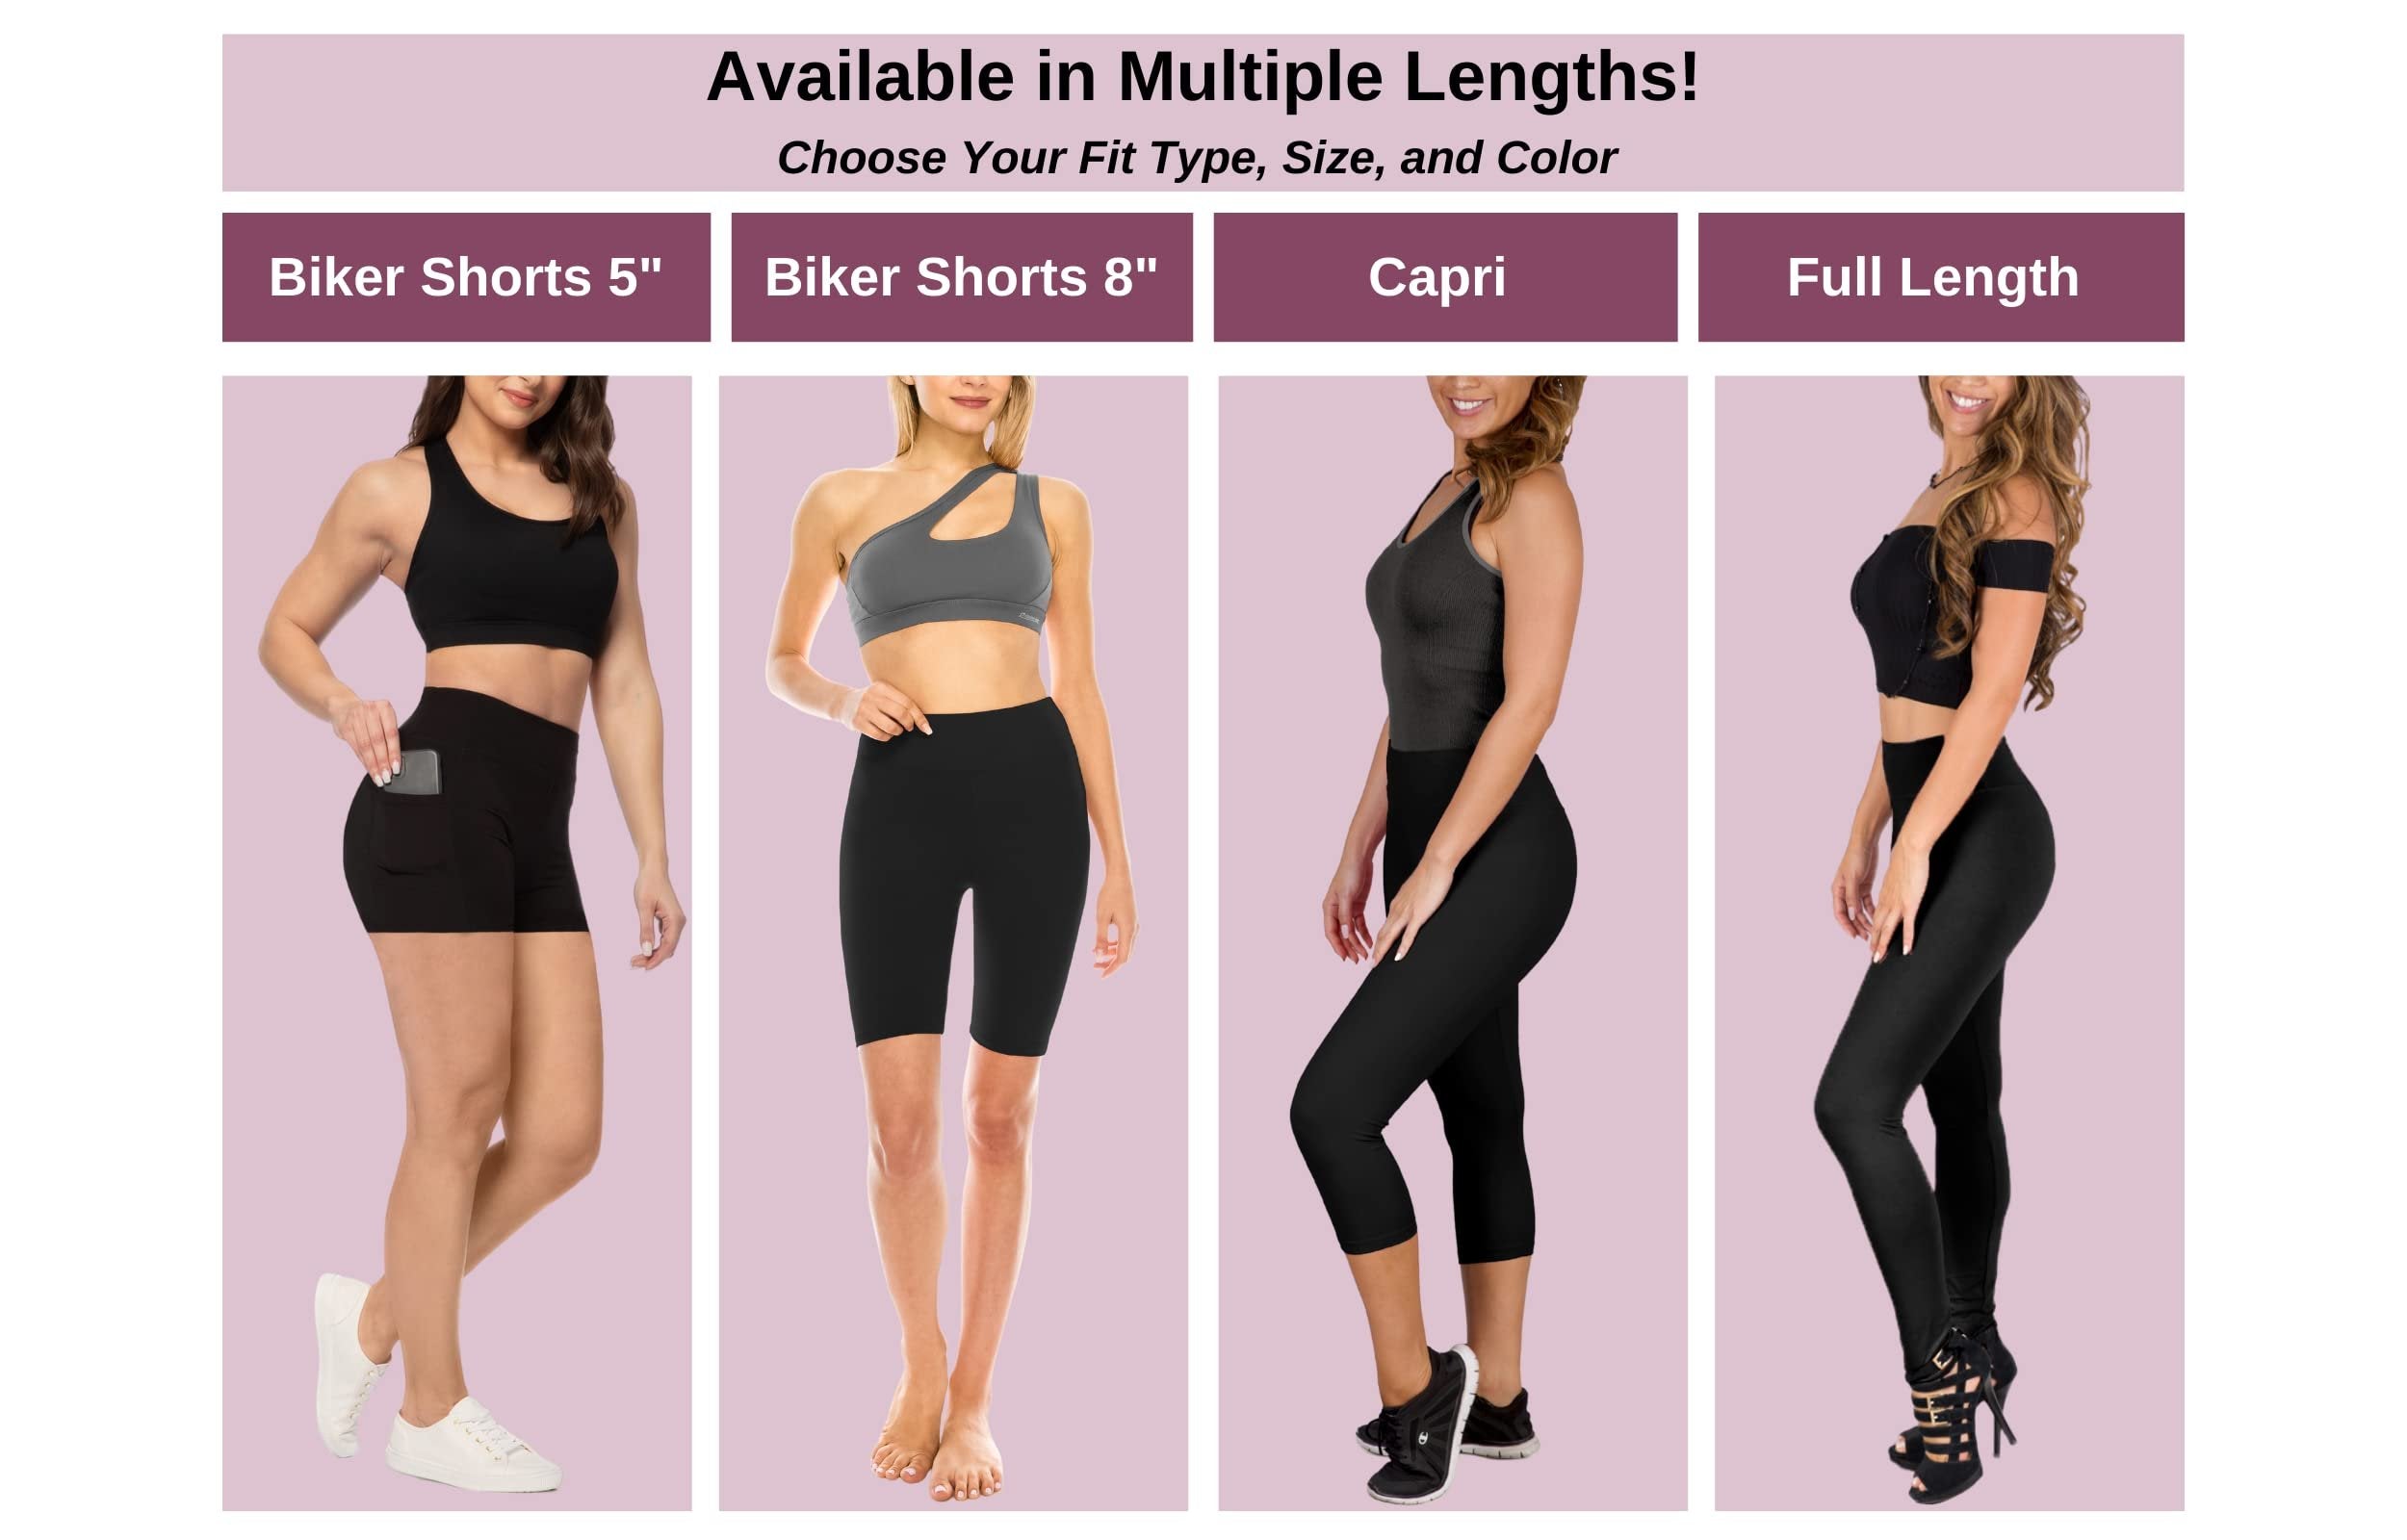 Black SATINA High Waisted Capri Leggings for Women - Tummy Control, Yoga - 3 Inch Waistband - Free Shipping